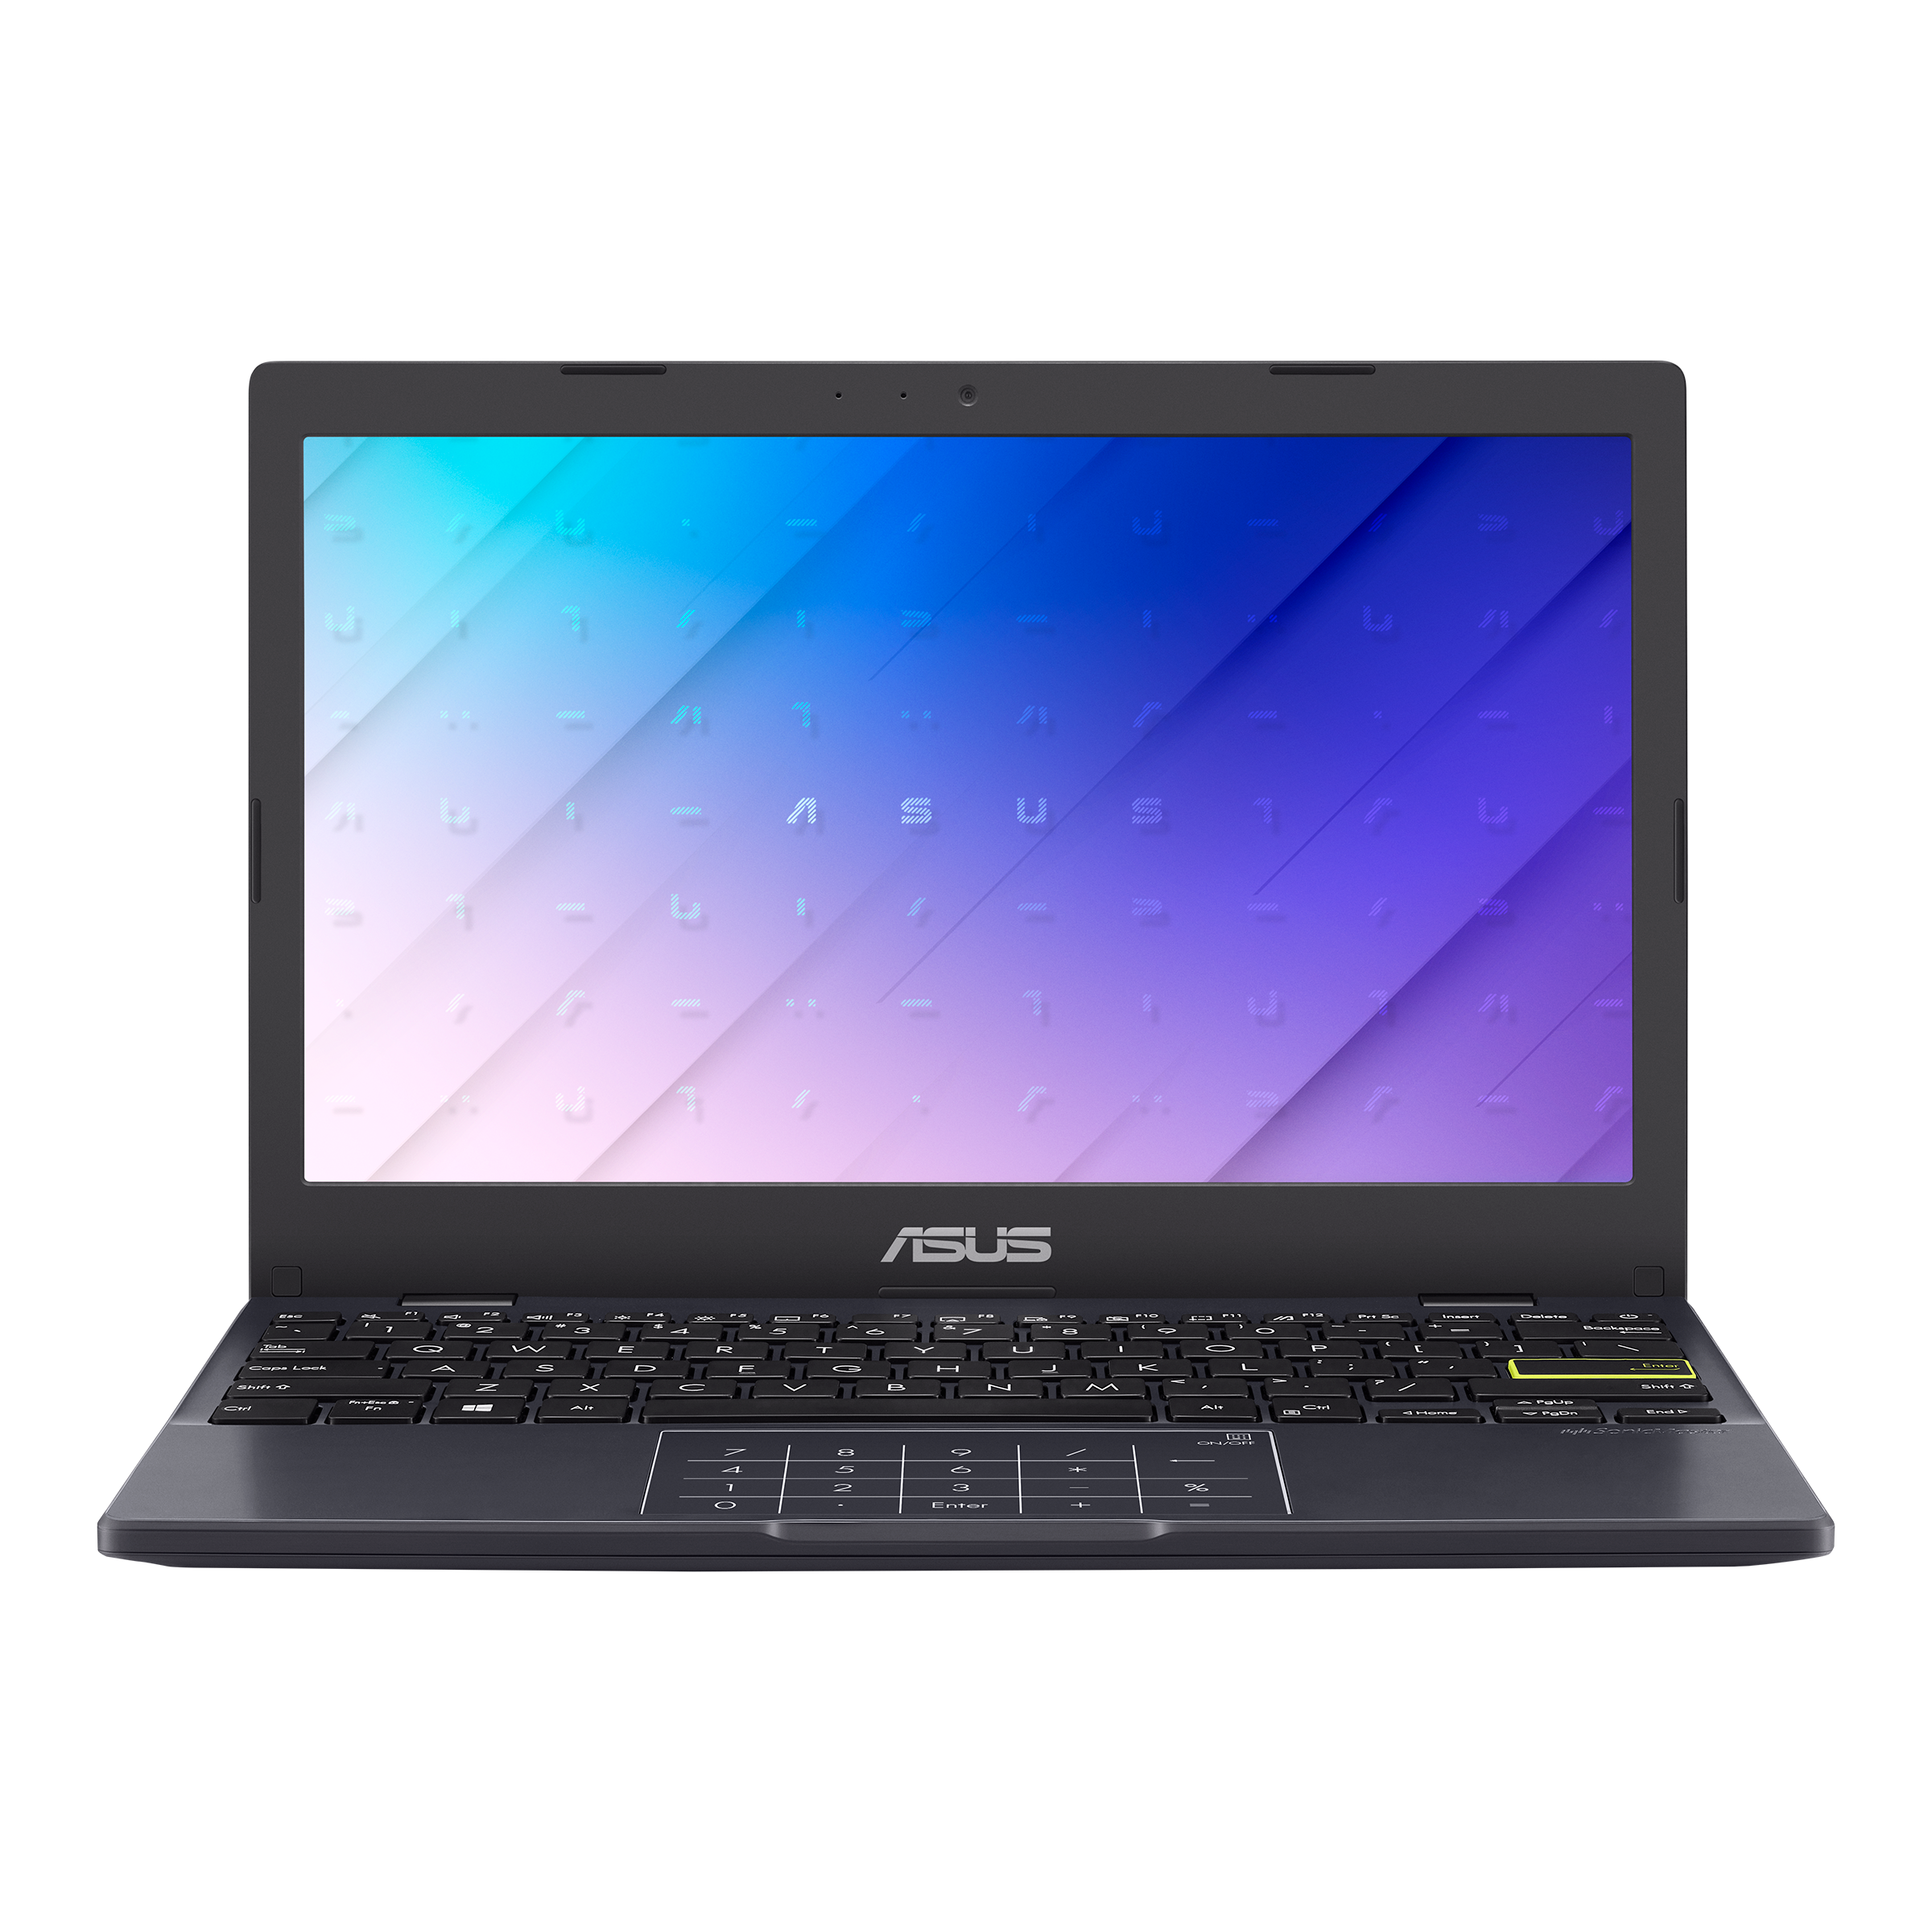 2022 ASUS 14 Thin Light Business Student Laptop Computer, Intel Celeron  N4020 Processor, 4GB DDR4 RAM, 64 GB Storage, 12Hours Battery, Webcam, Zoom